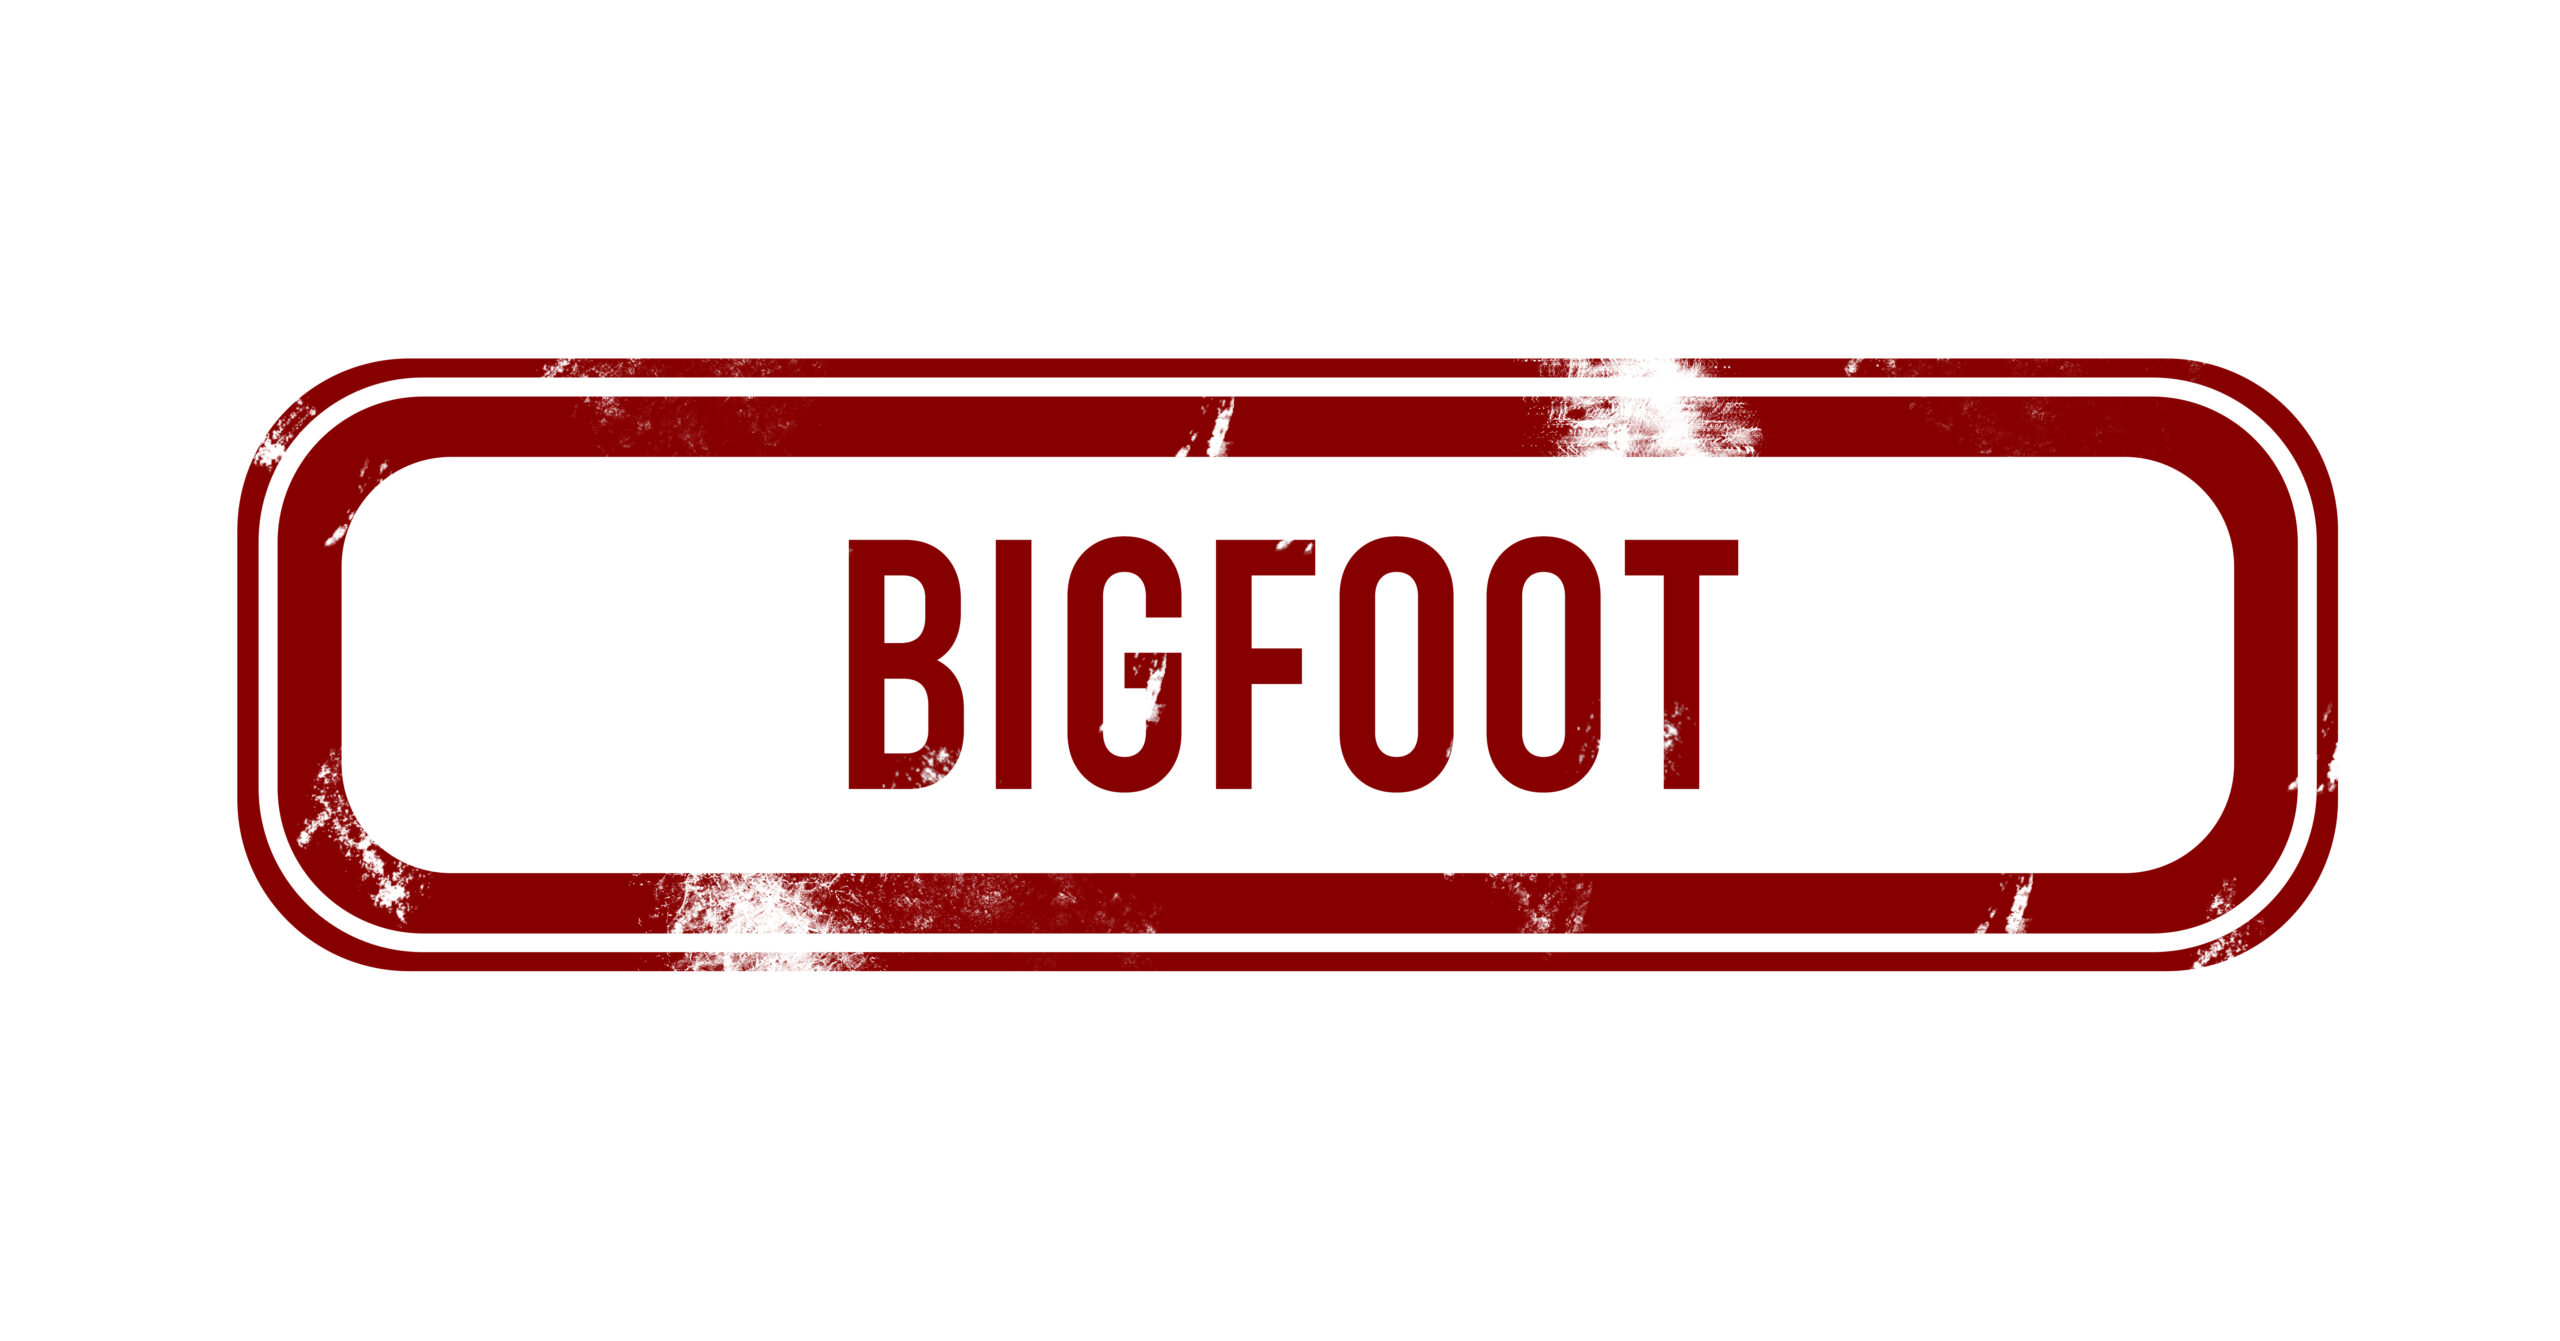 Bigfoot - red grunge button, stamp wording